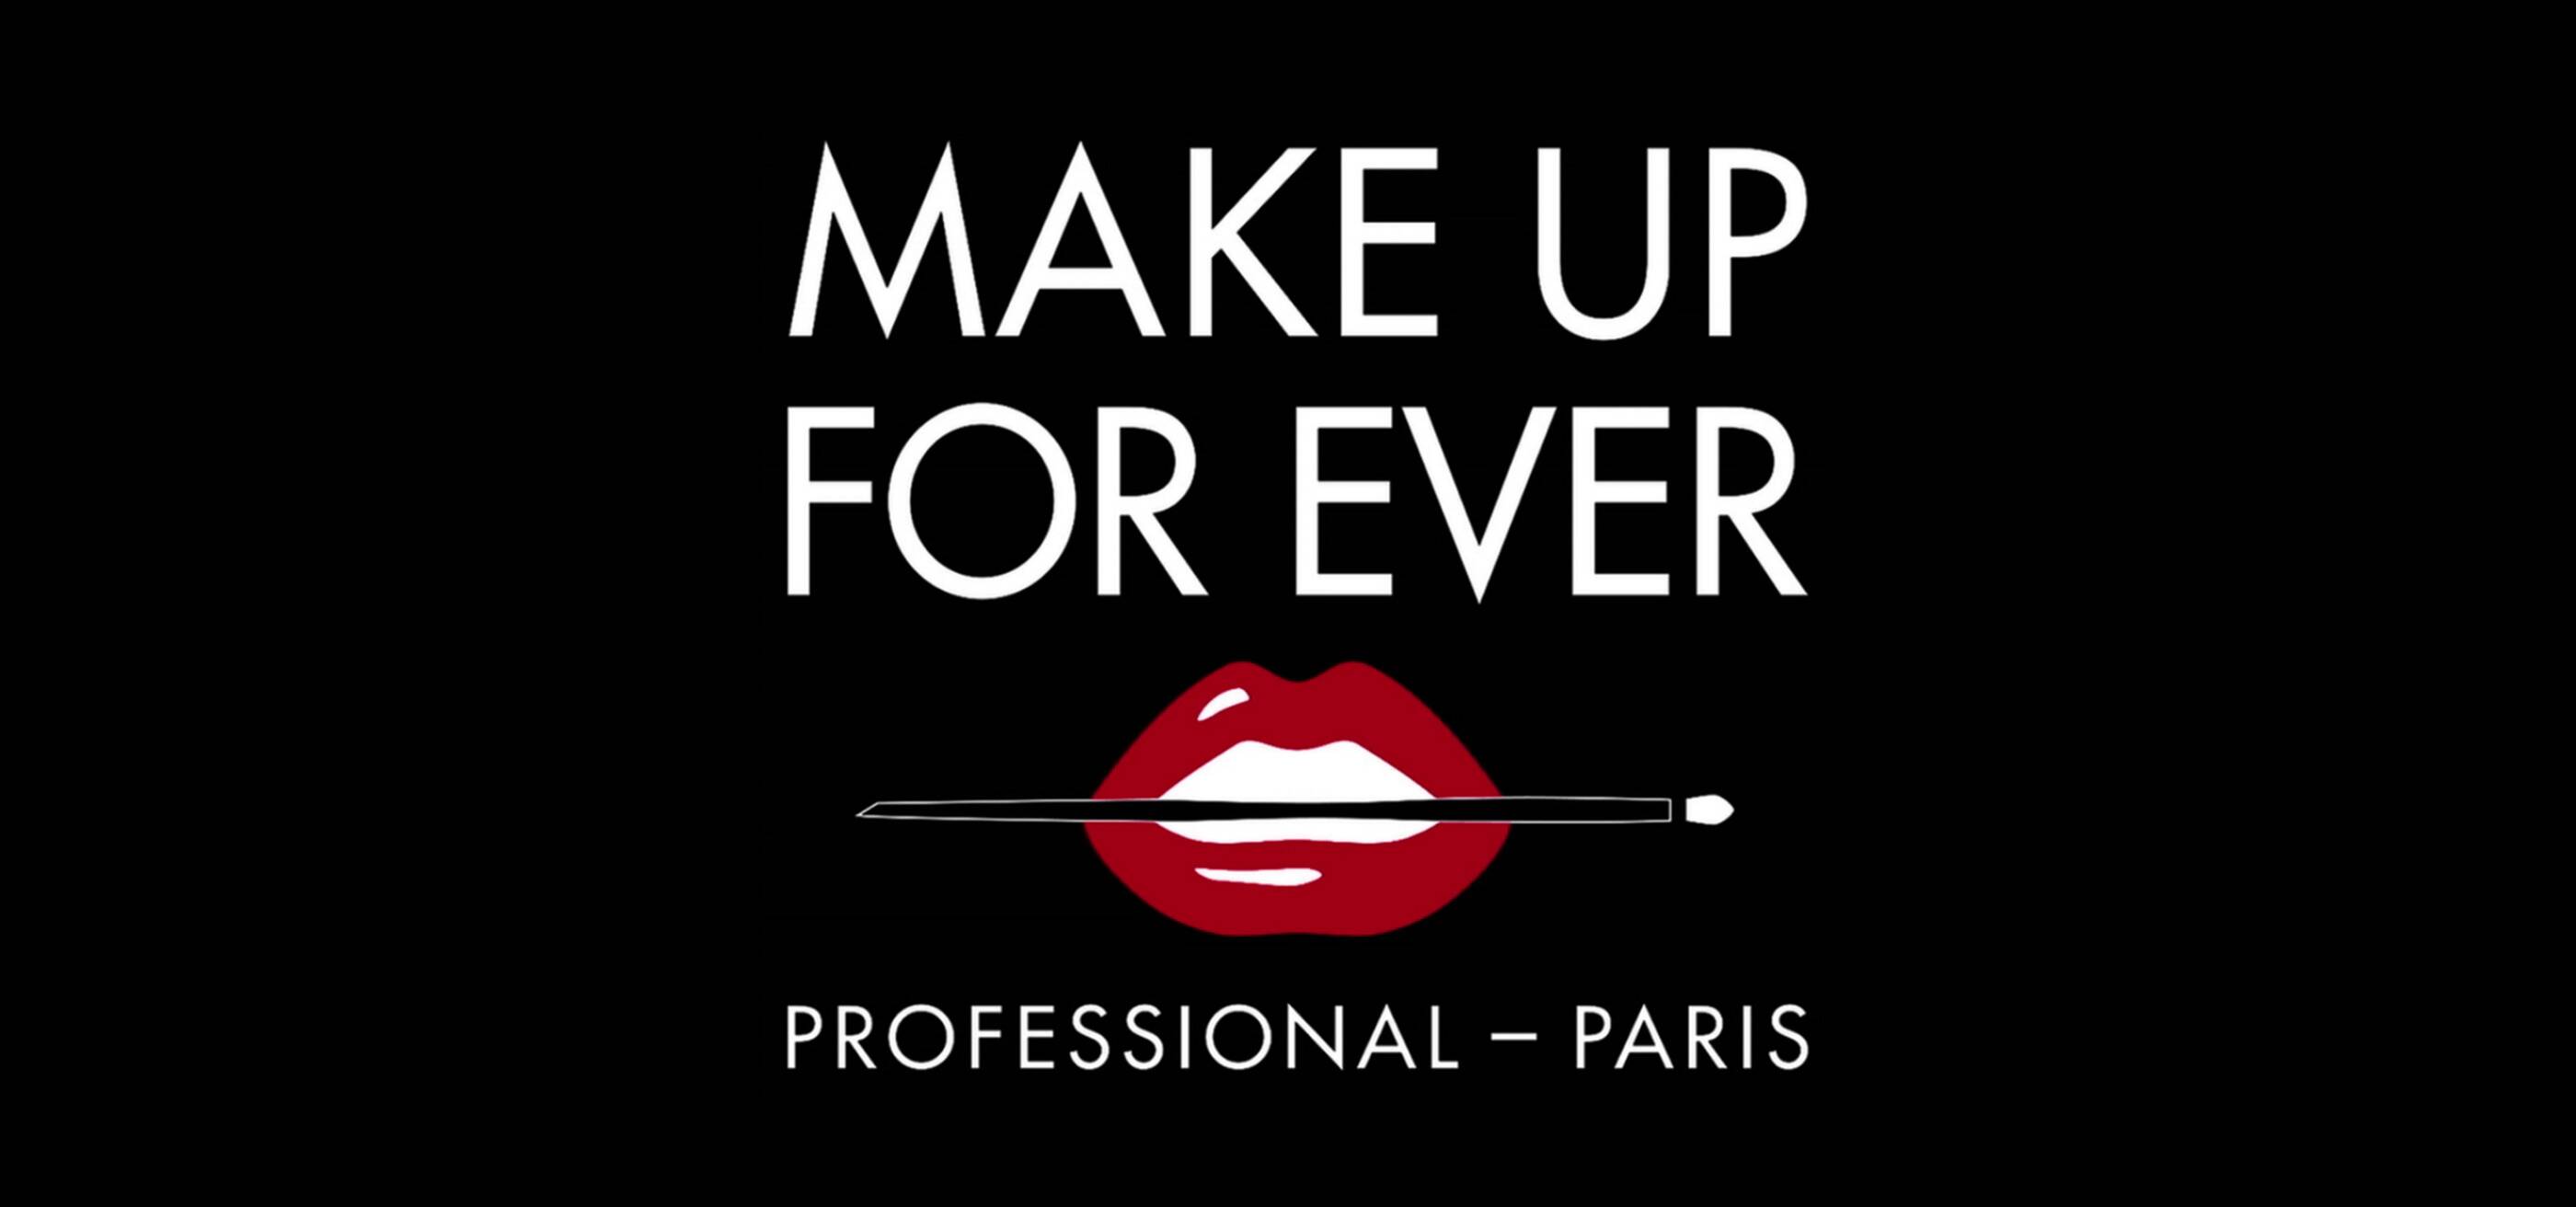 Make Up For Ever: Professional Makeup